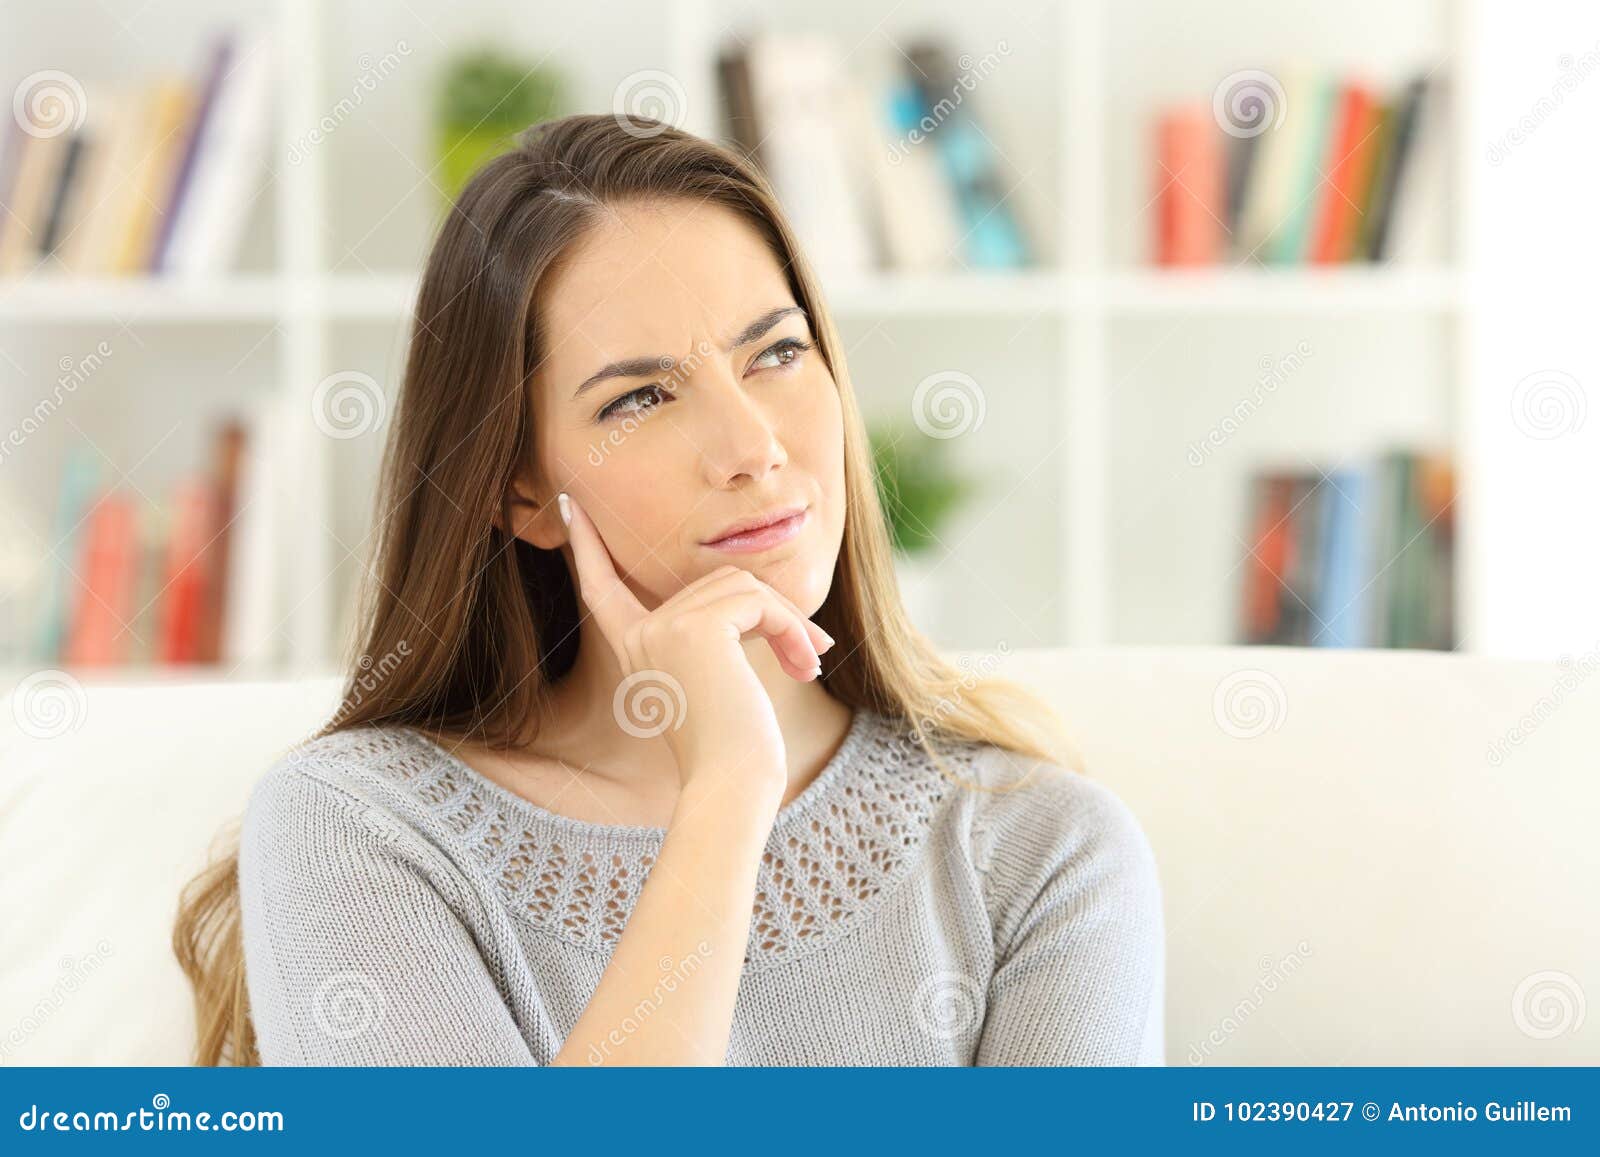 woman wondering sitting at home